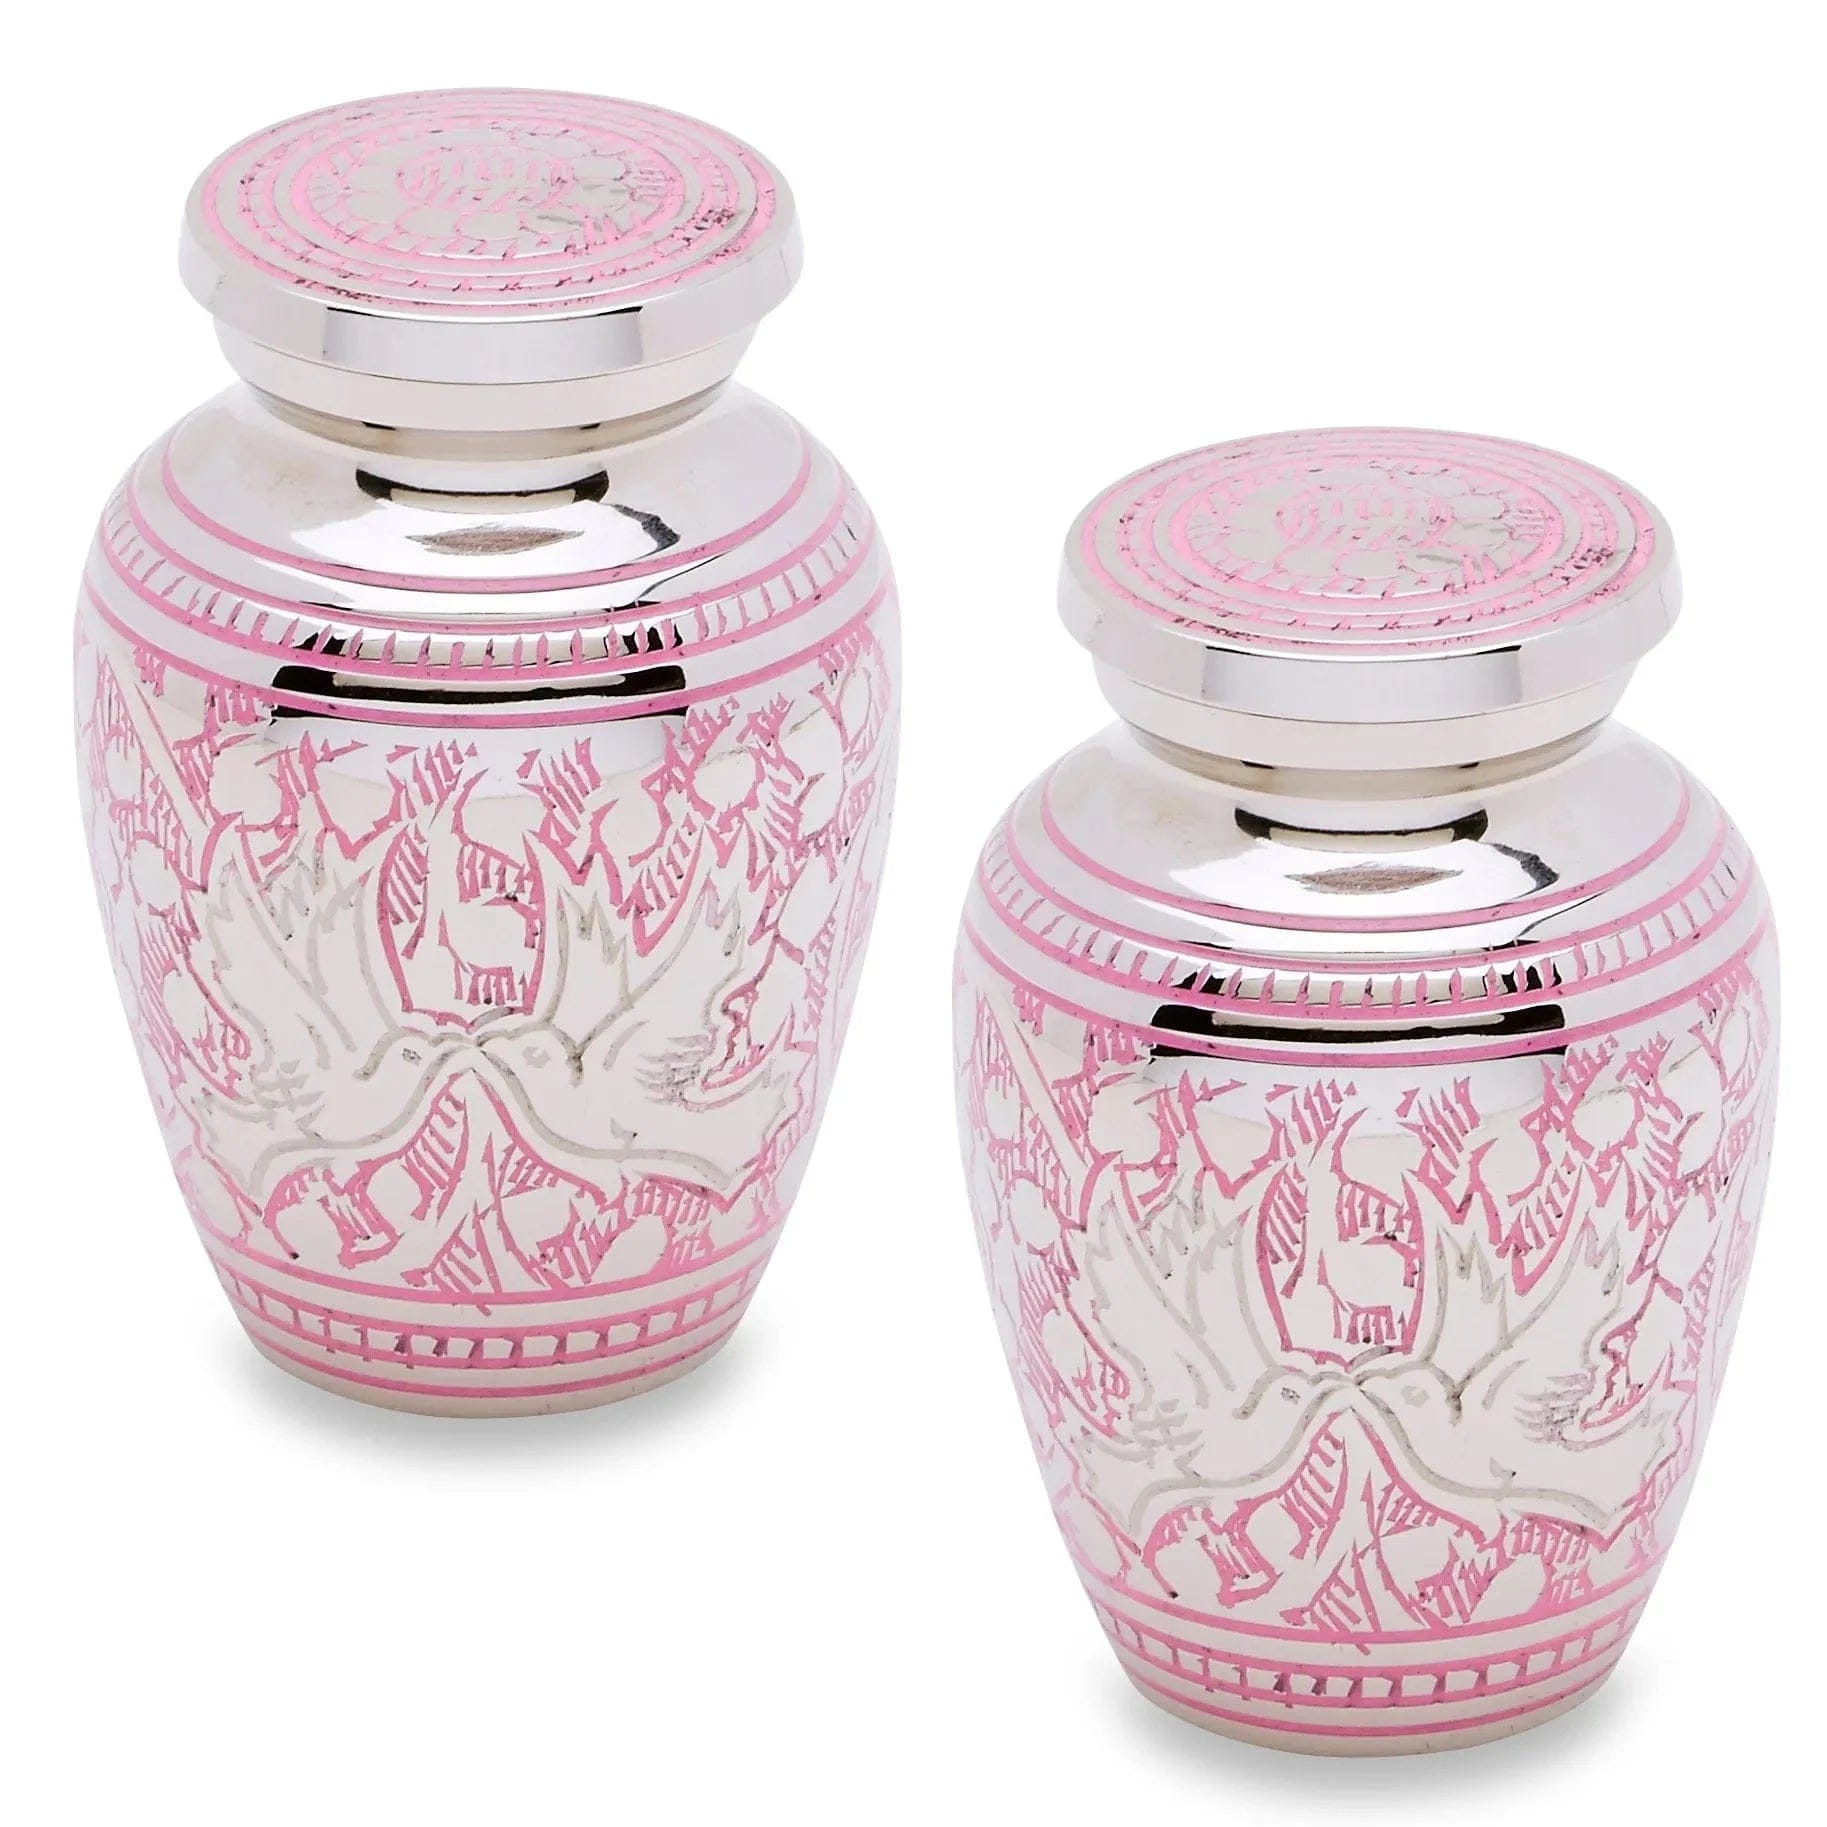 Pair of Pet Keepsake Urns - Pink Loving Doves | Dover Brass Urns